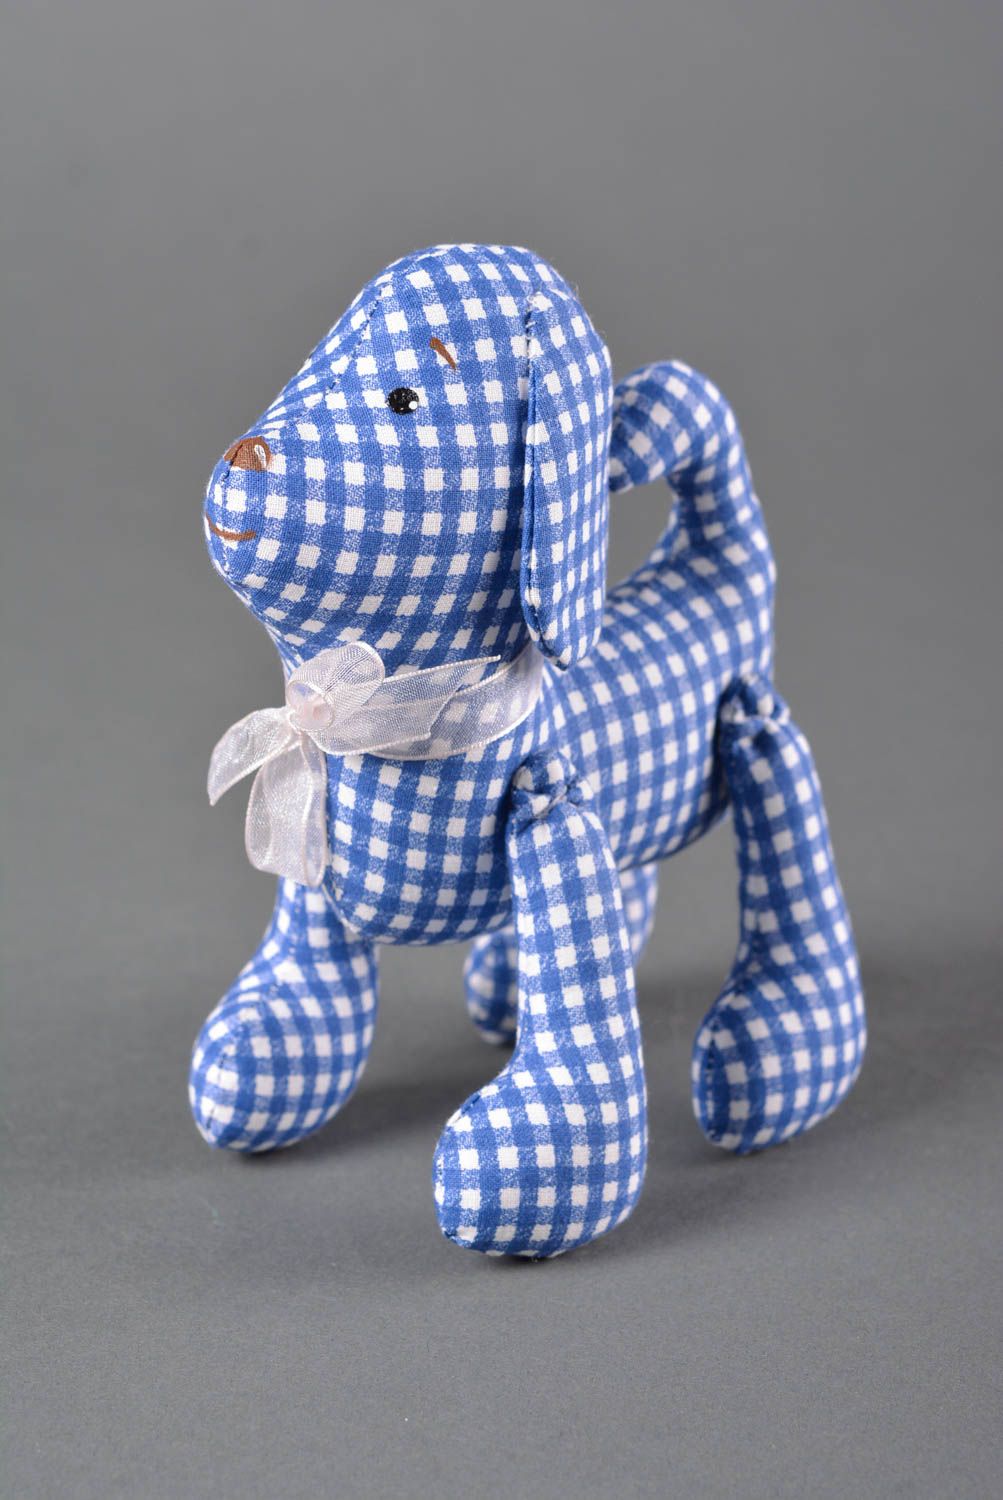 Handmade animal toy for nursery decor ideas soft toy for baby gift ideas photo 5